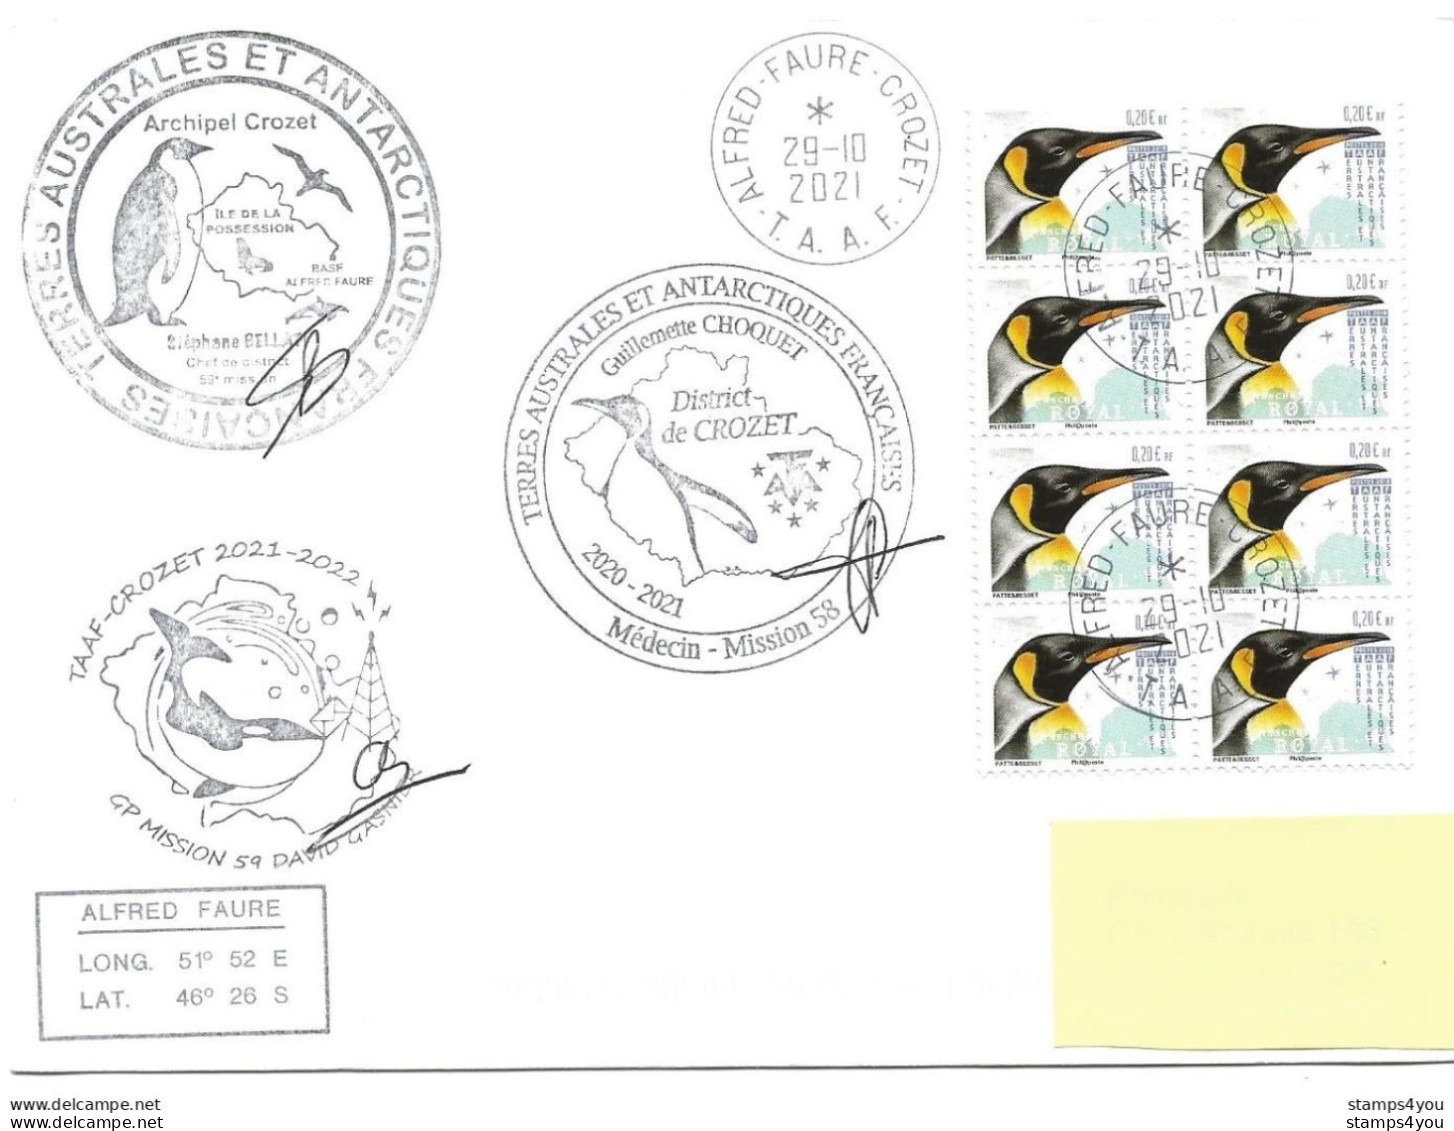 255 - 67 - Enveloippe TAAF Crozet - Cachets Illustrés Mission 59 - 2021 - Forschungsstationen